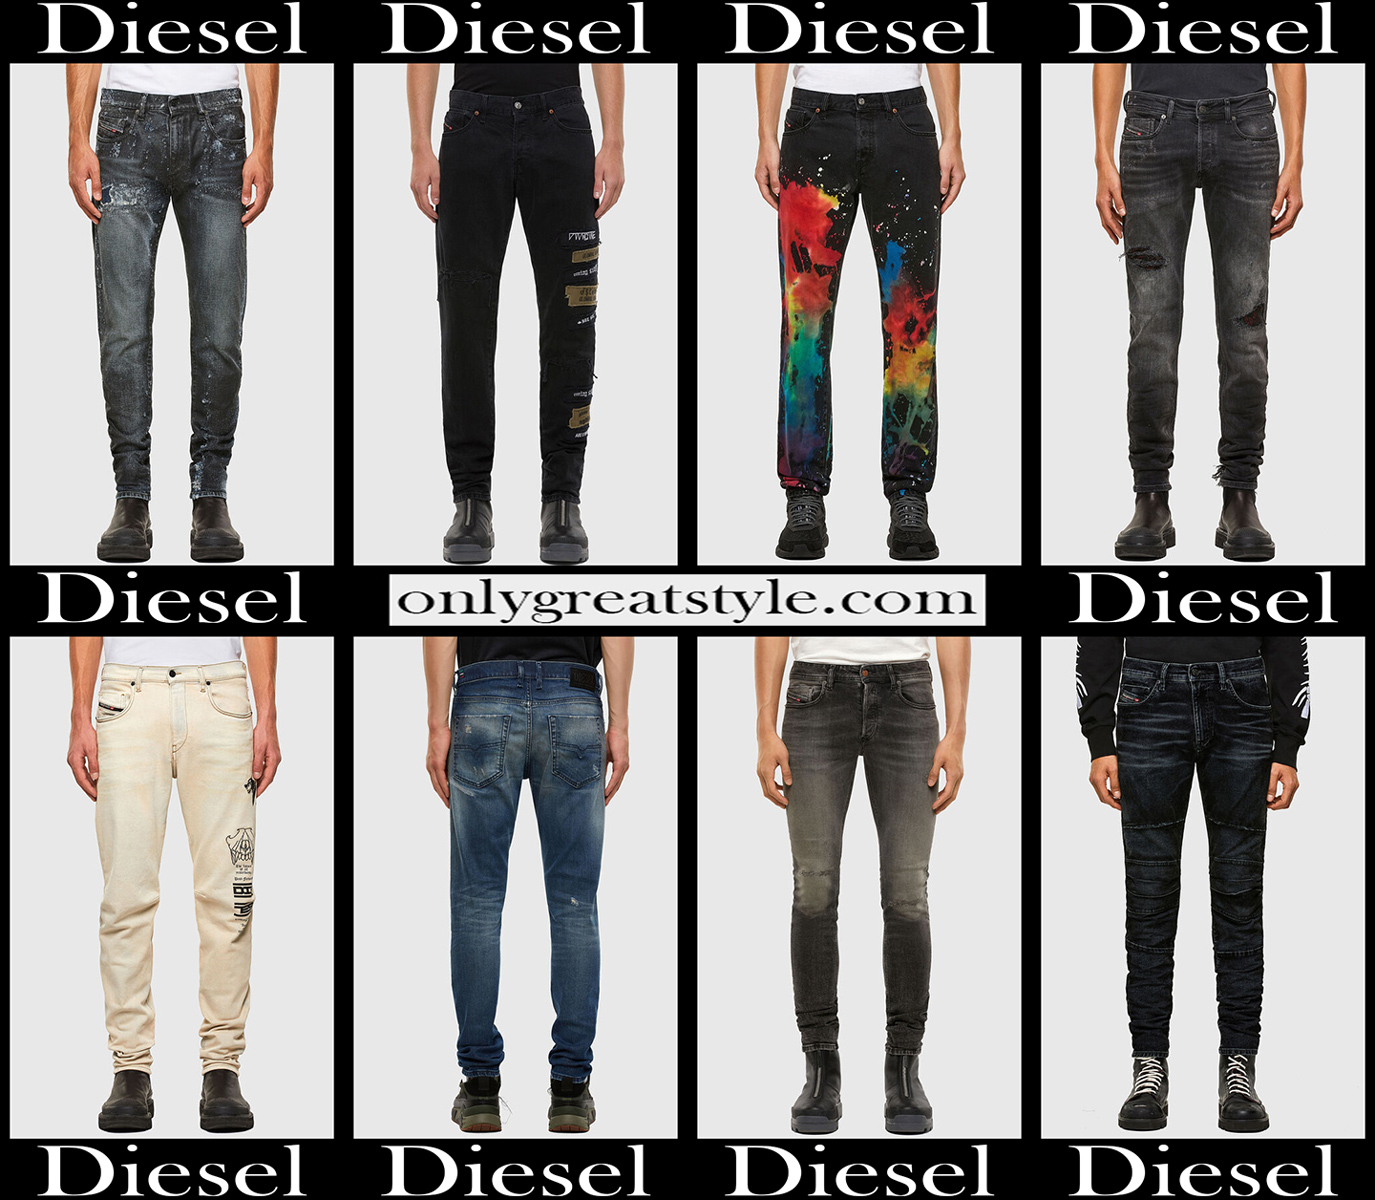 Diesel jeans 2021 new arrivals mens clothing denim